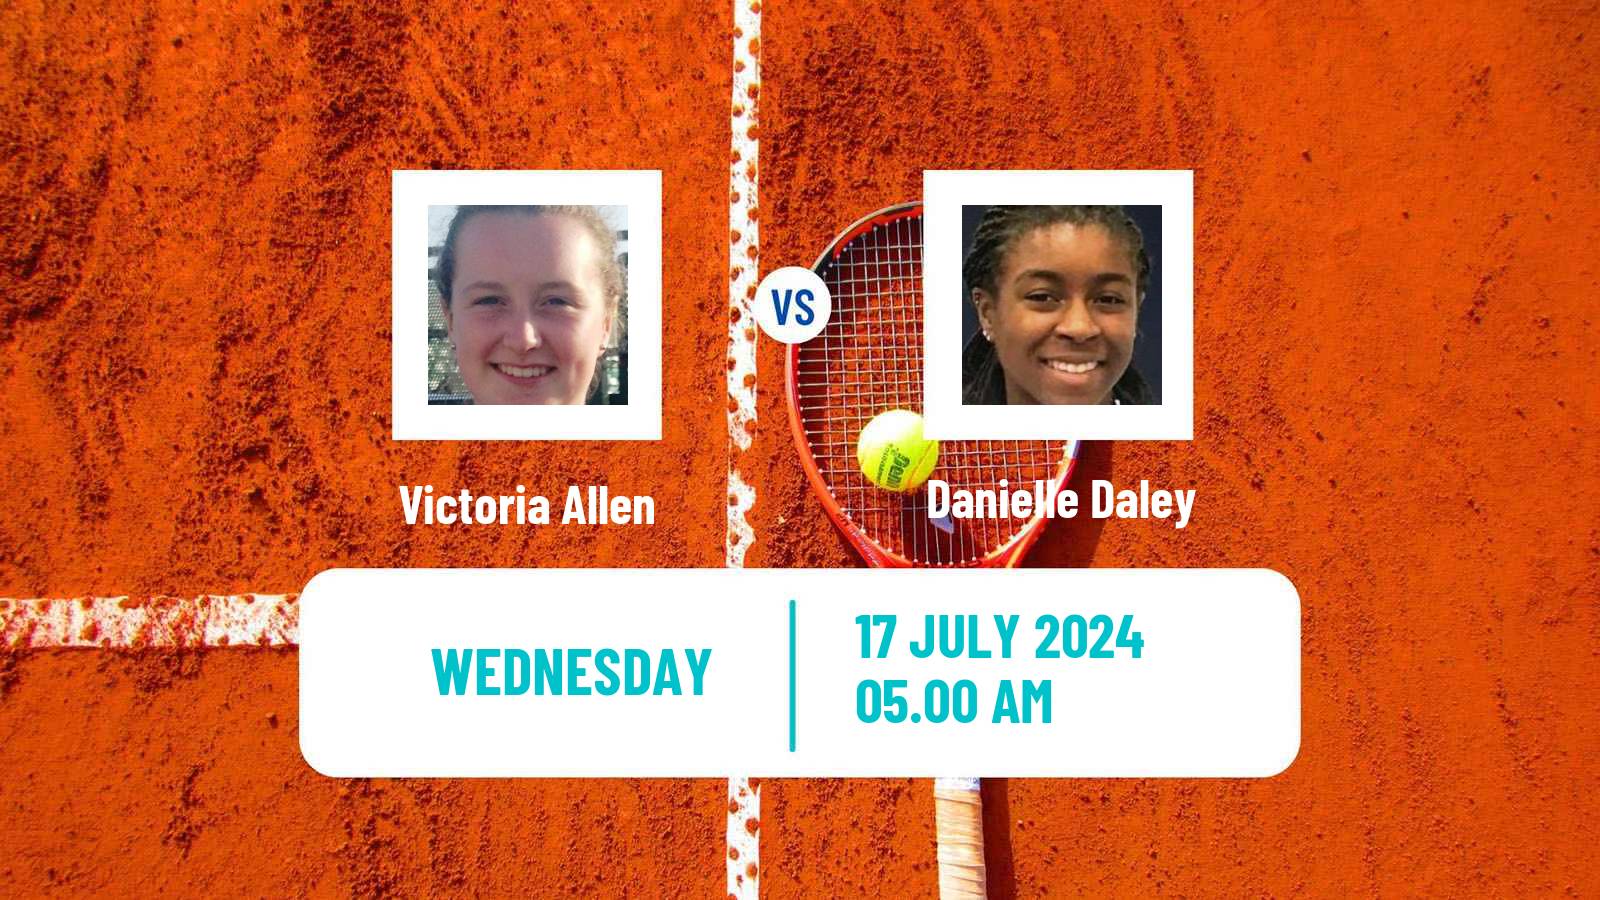 Tennis ITF W50 Nottingham Women Victoria Allen - Danielle Daley